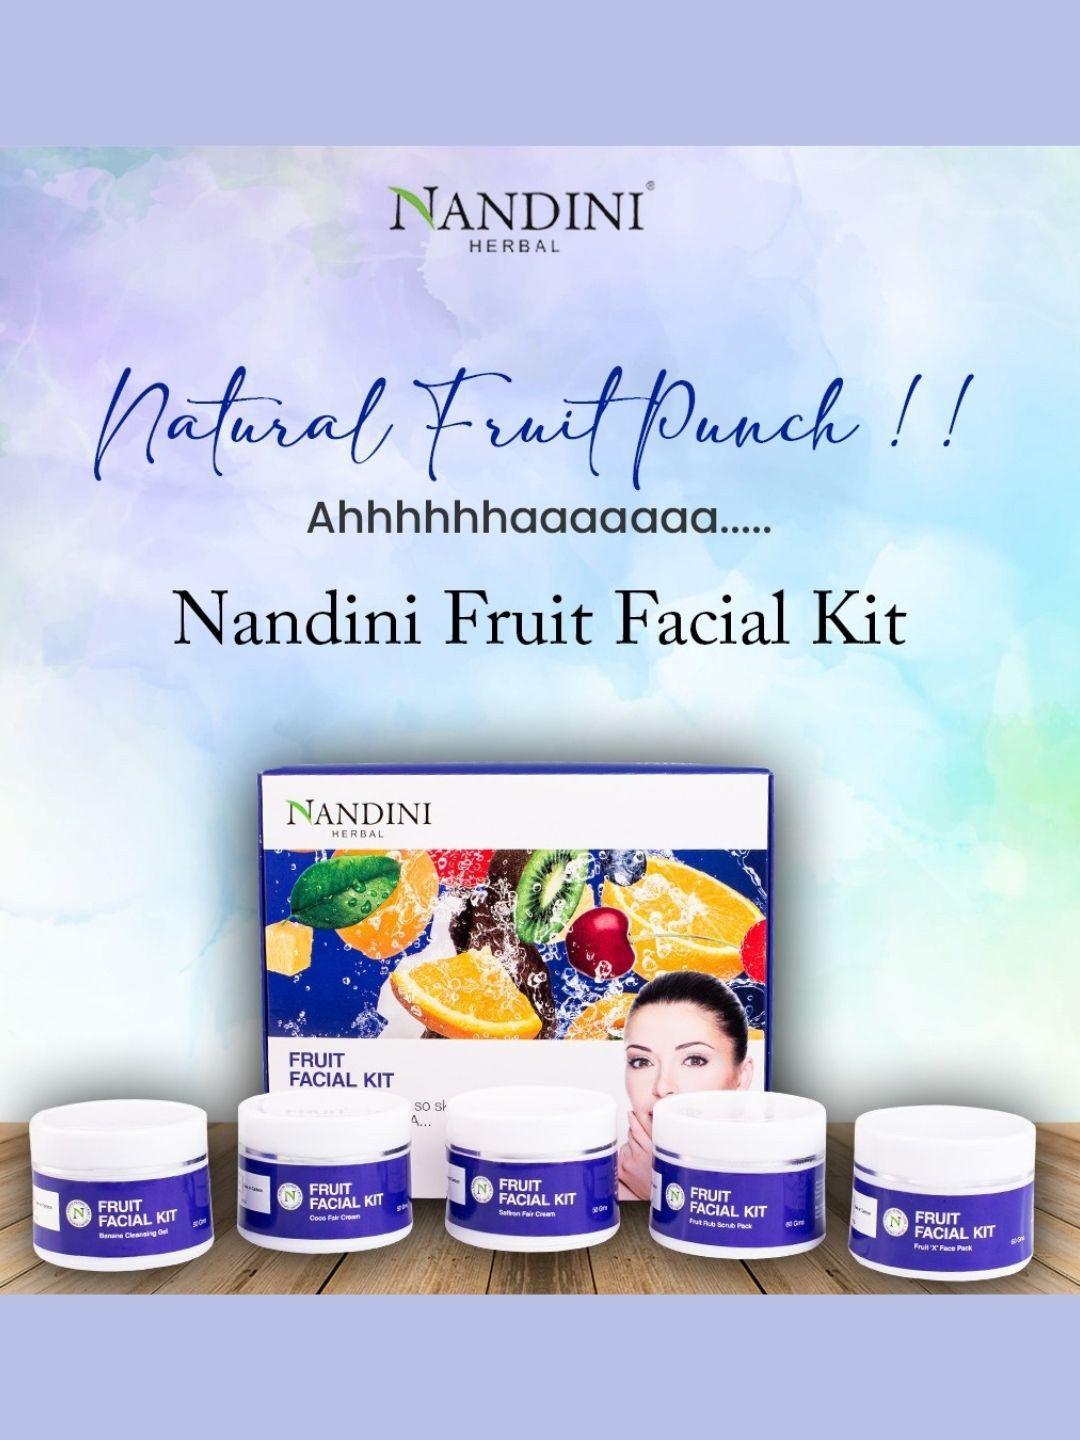 nandini herbal natural fruit punch ahhhhhhaaaaa facial kit